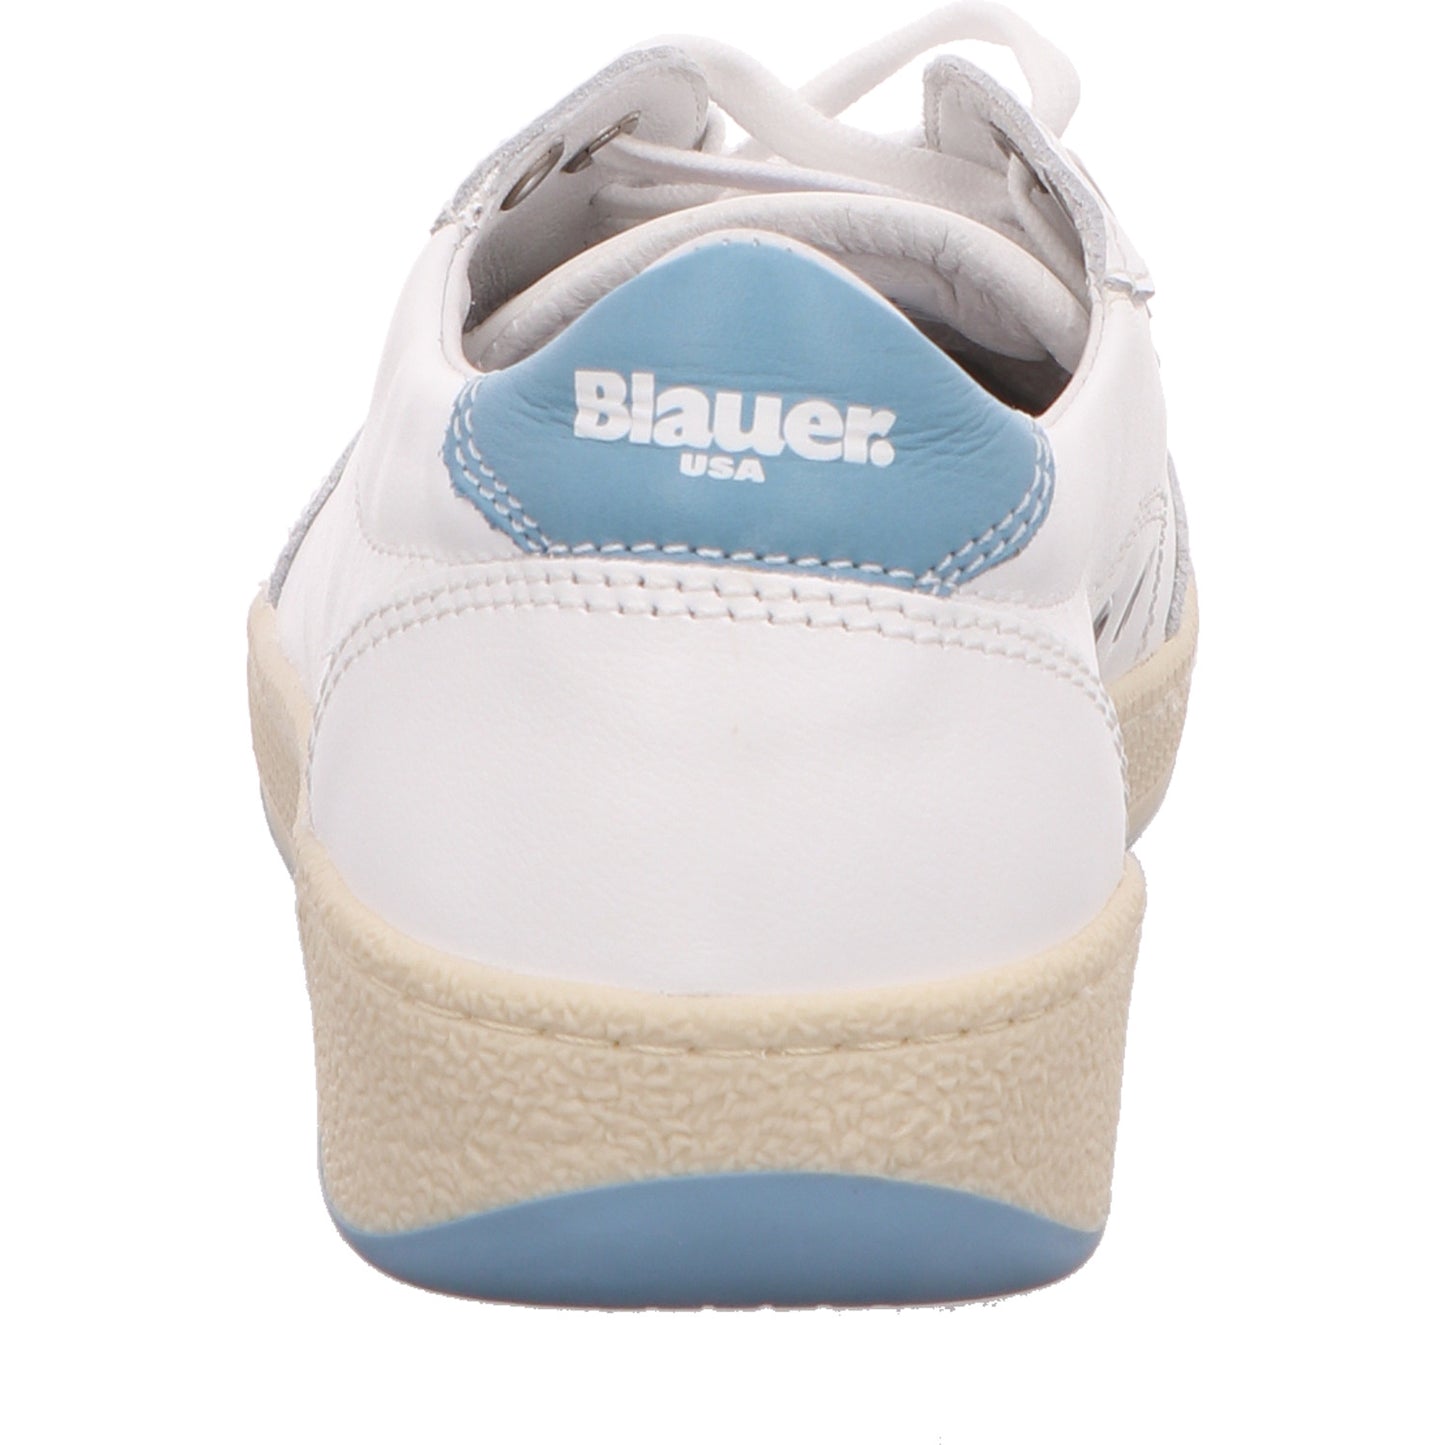 Blauer Shoes Olympia 01 Leder/Synth./Textil-kombiniert    Bild4